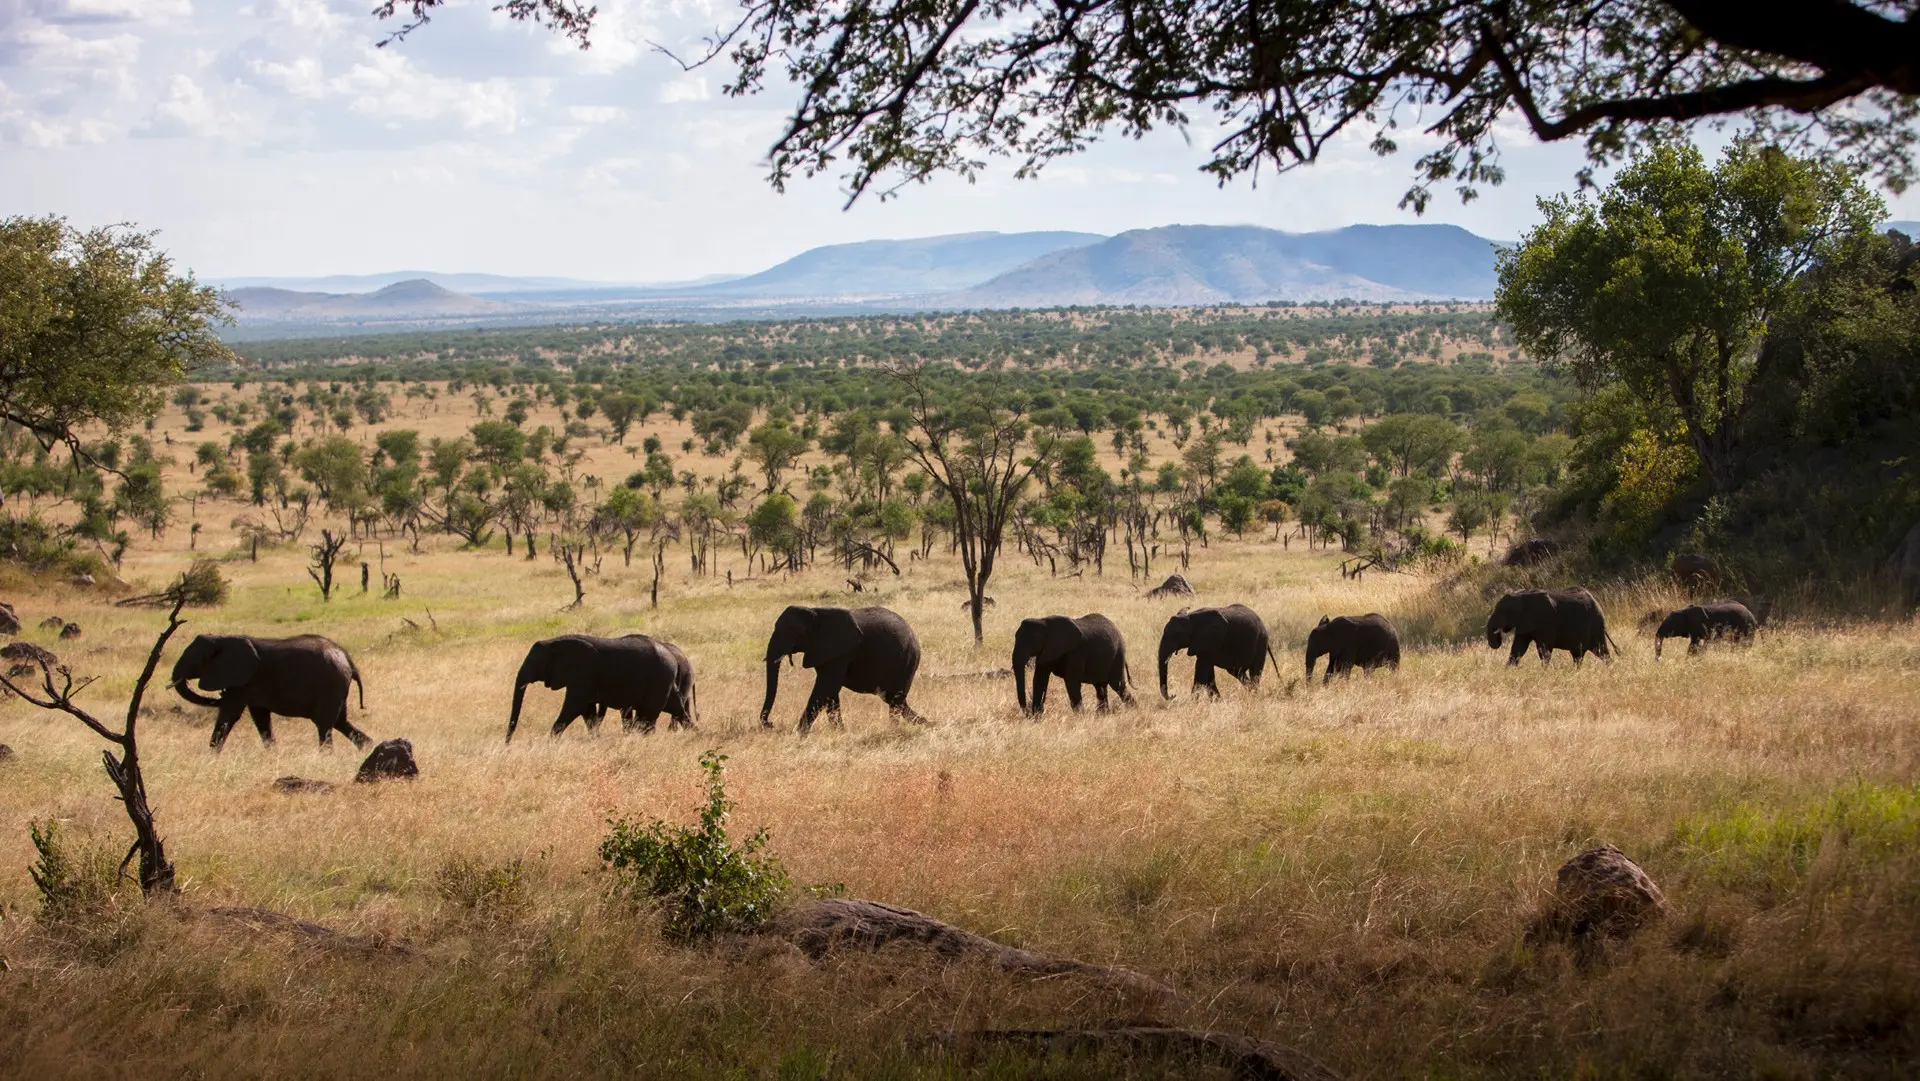 Hotel review Service & Facilities' - Four Seasons Safari Lodge Serengeti - 4